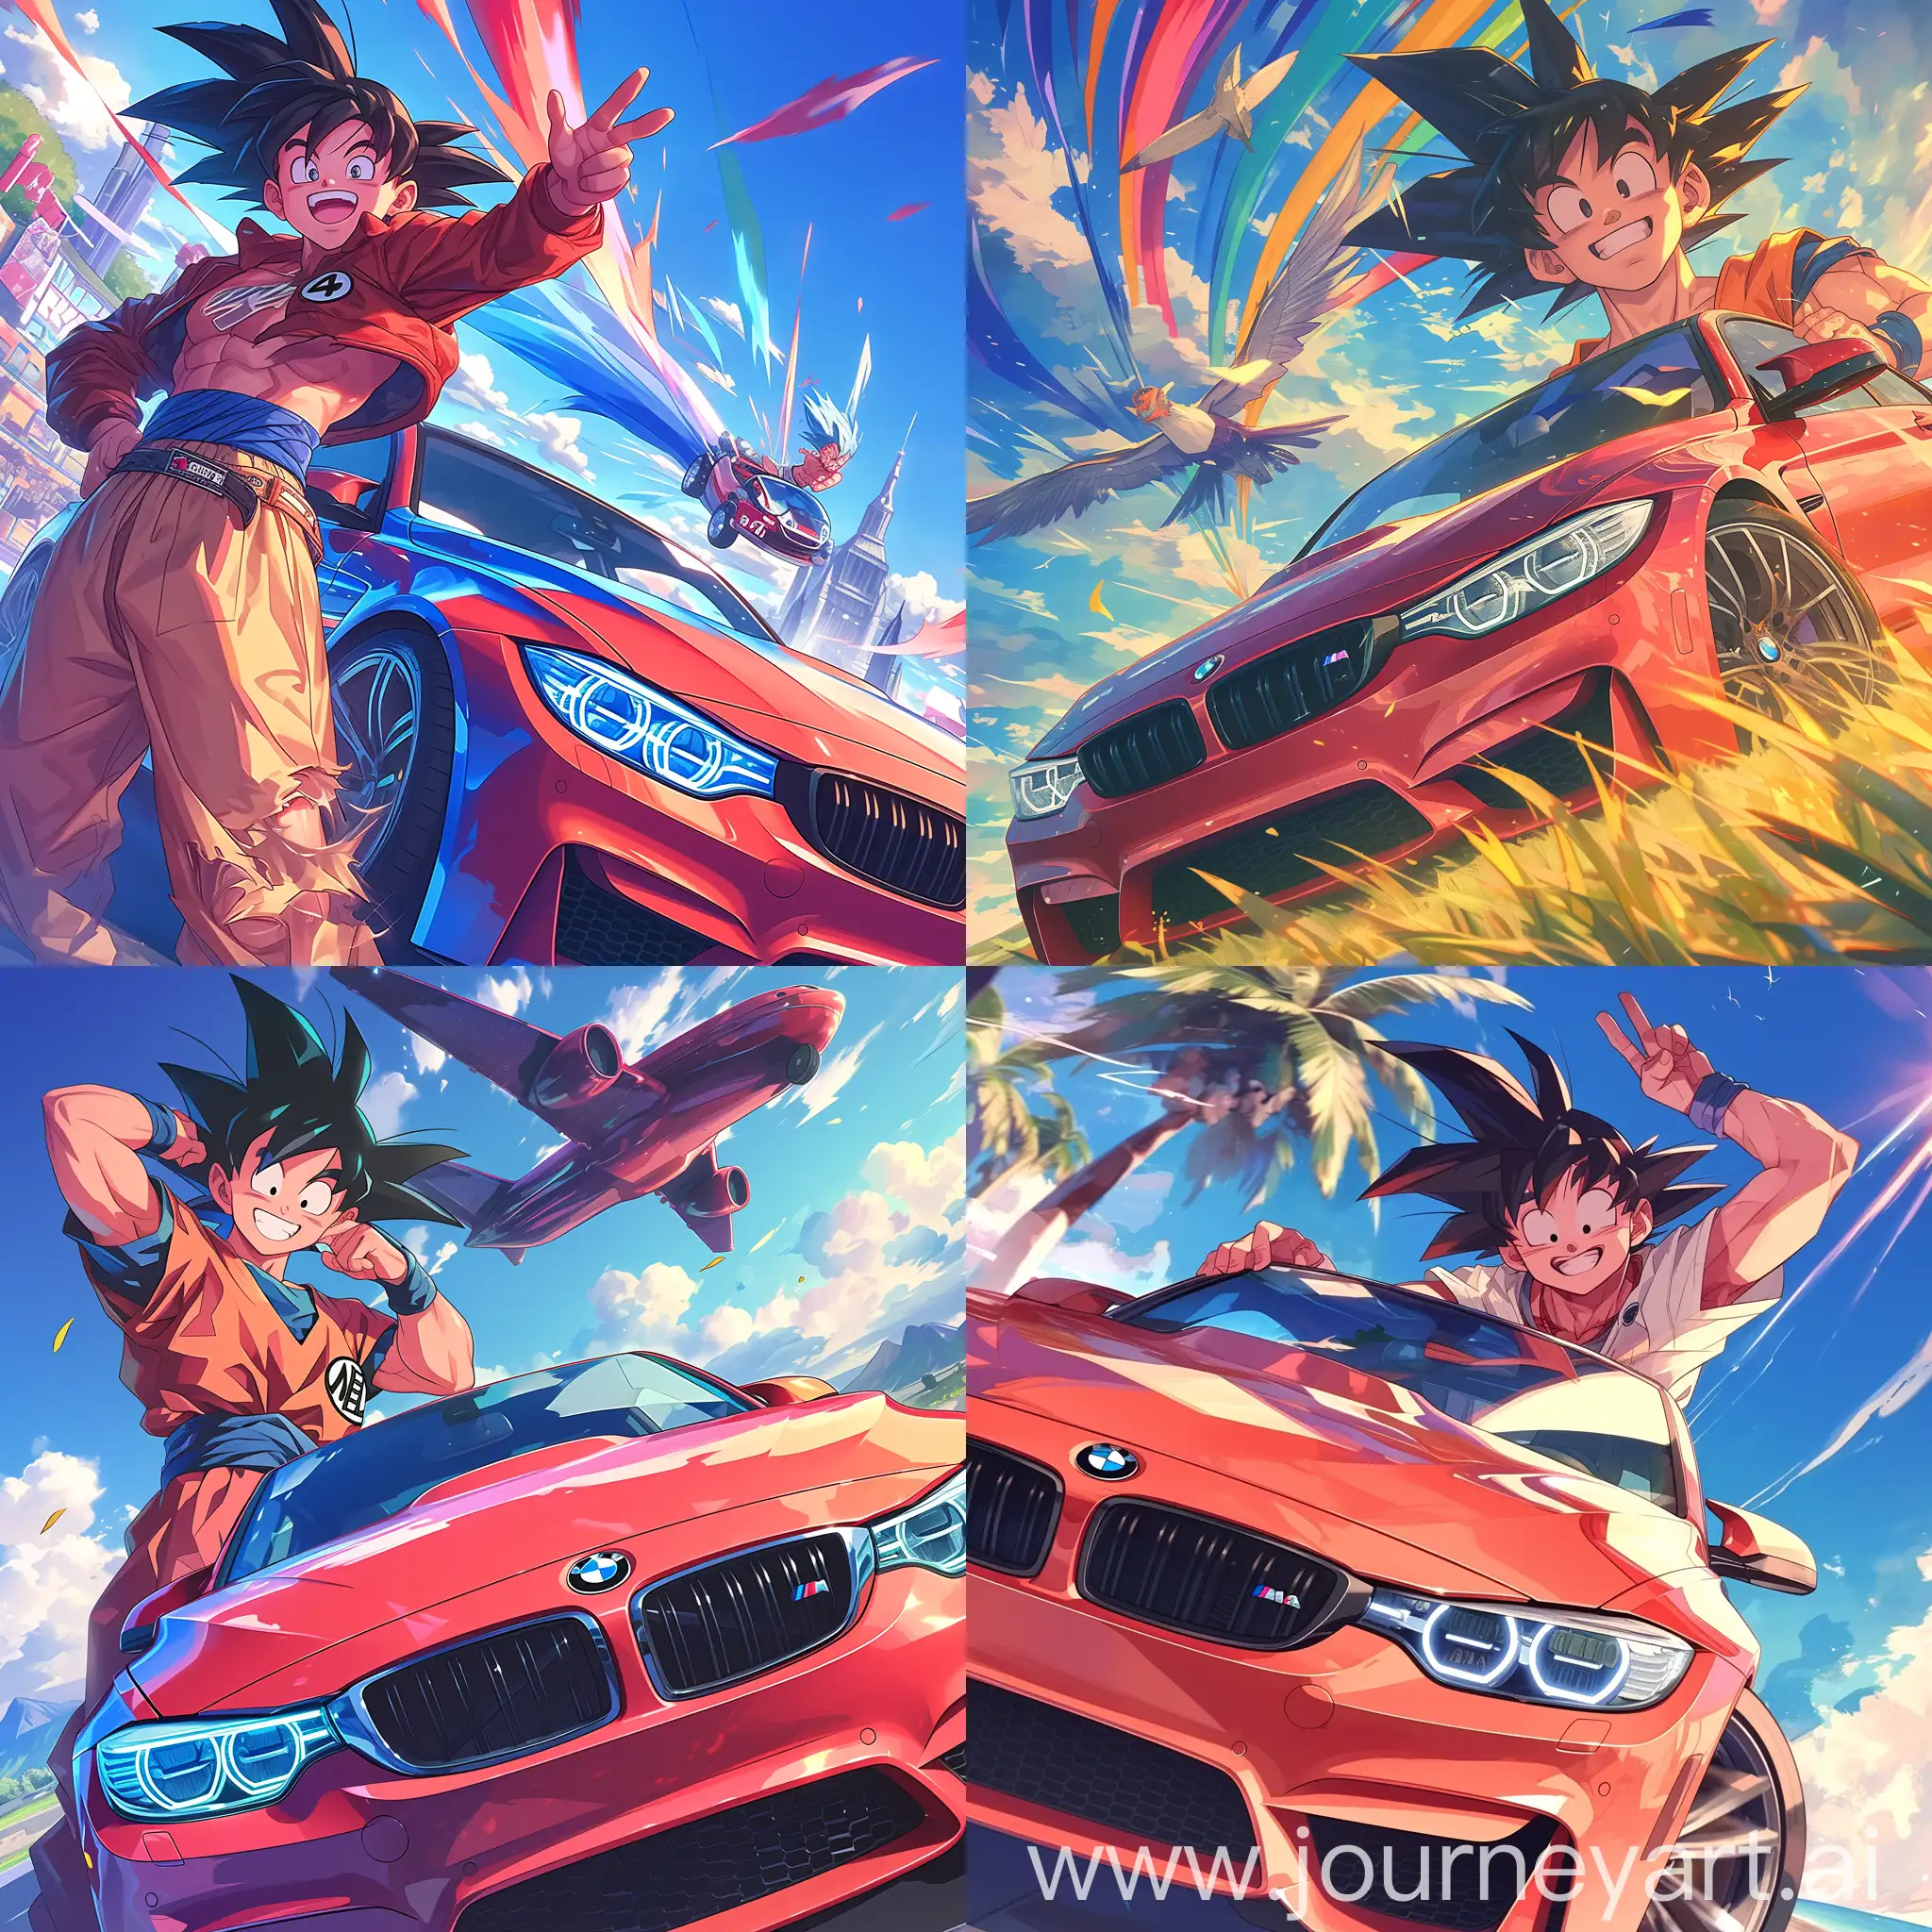 Goku-Poses-Next-to-BMW-M4-in-Vibrant-Dragon-Ball-Z-Style